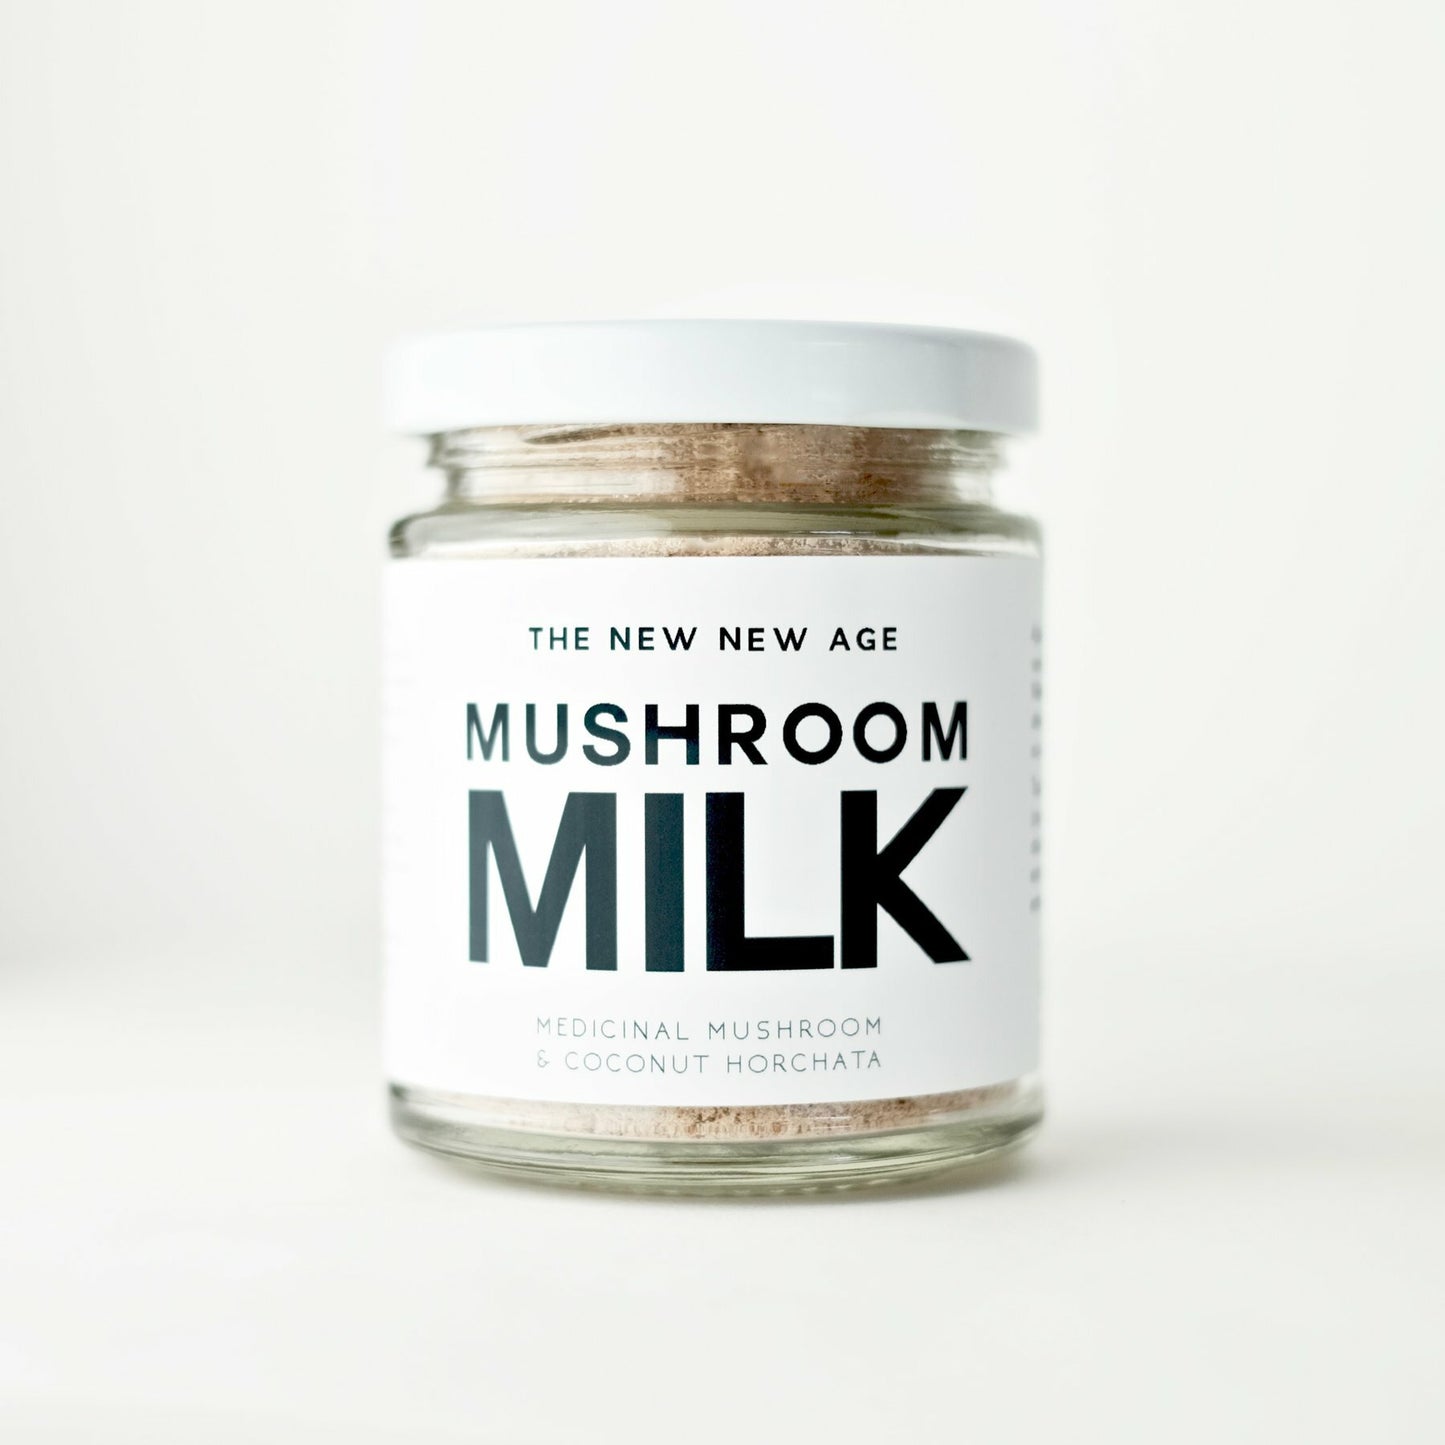 The New New Age Mushroom Milk